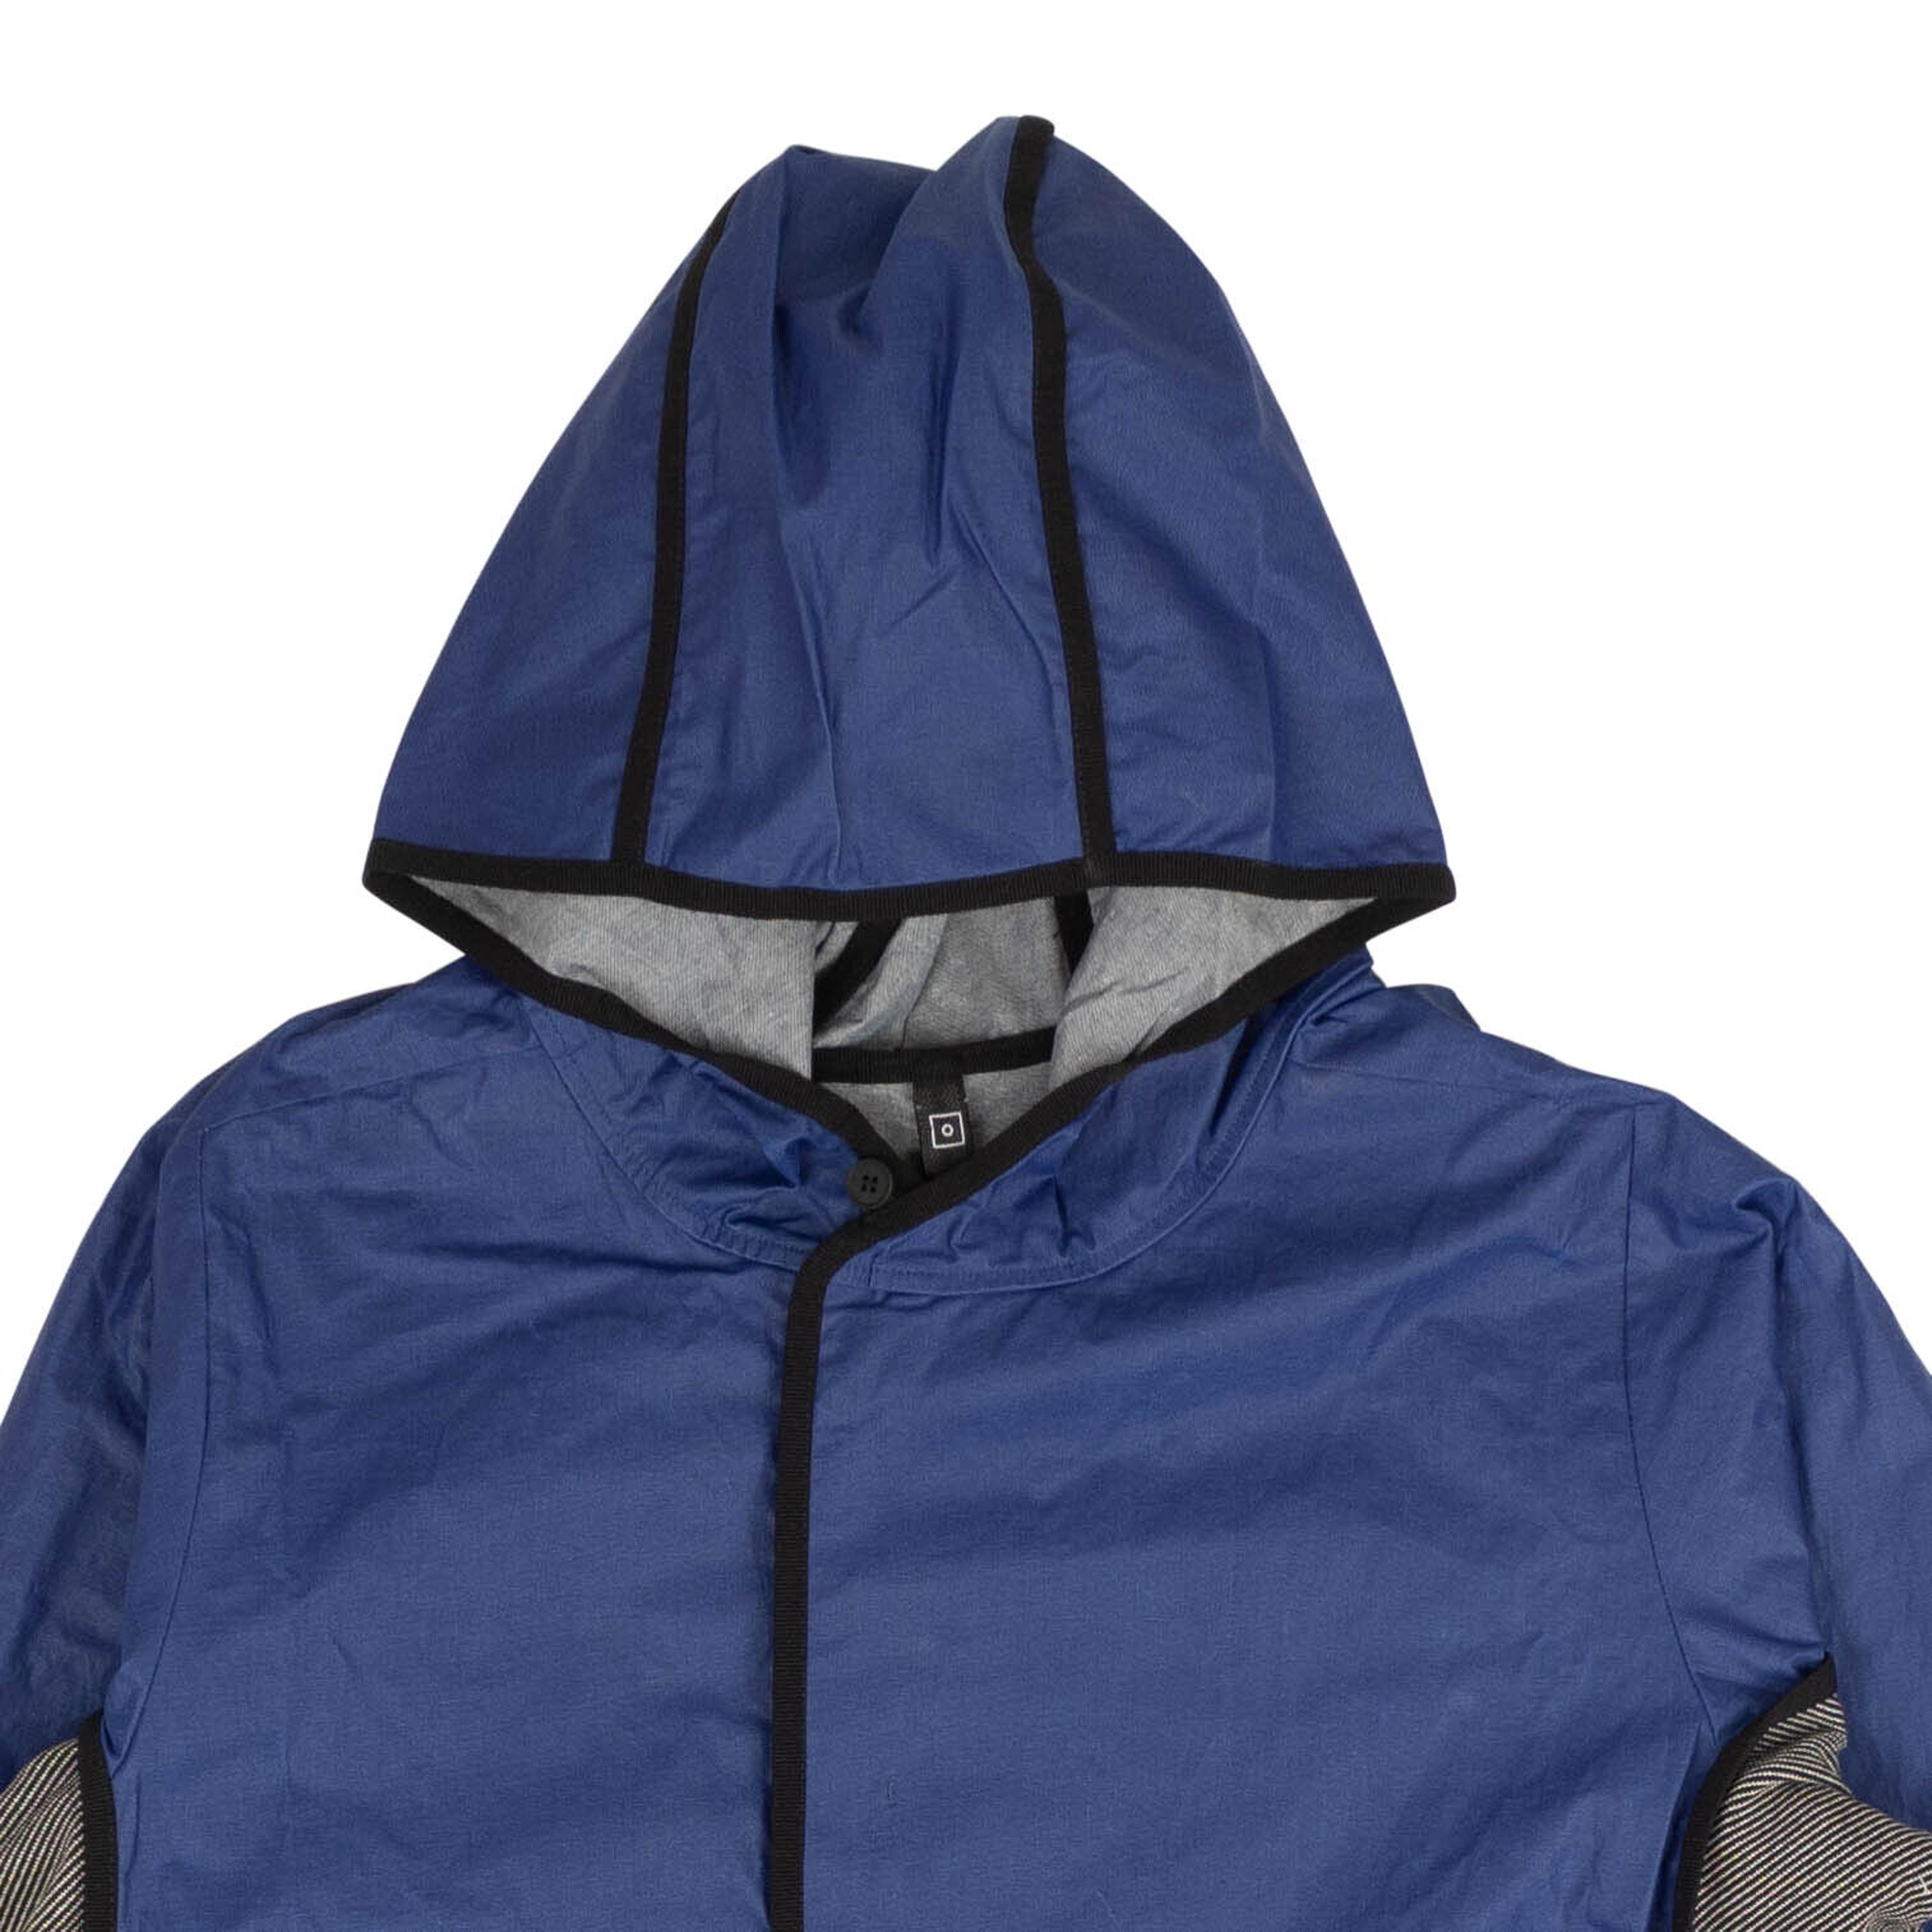 Alternate View 1 of Blue G5 Hooded Jacket